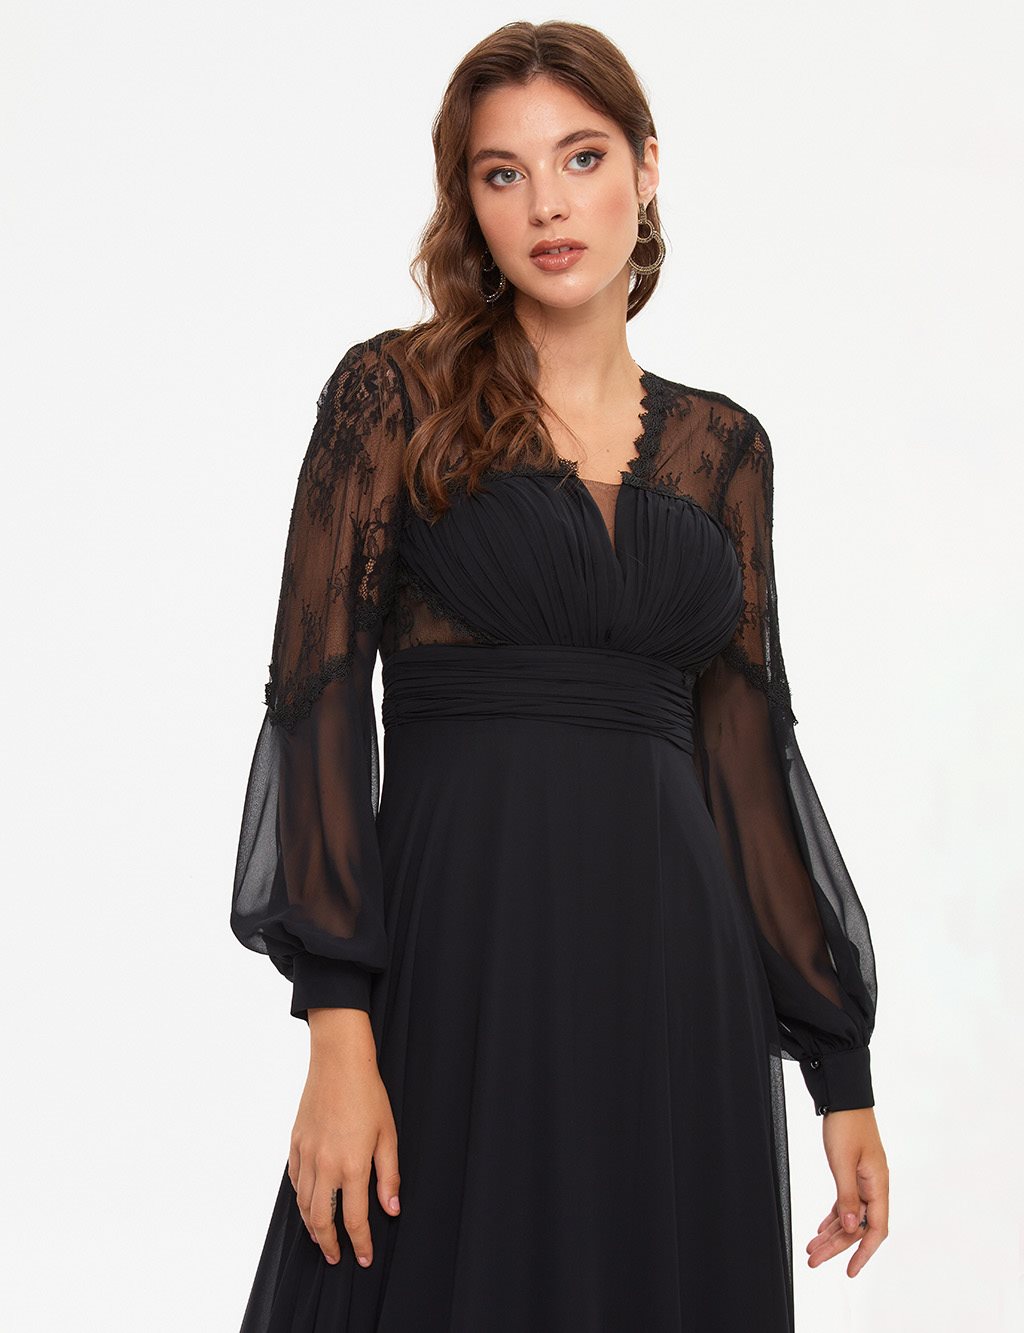 TIARA Illusion Collar Pleated Evening Dress Black